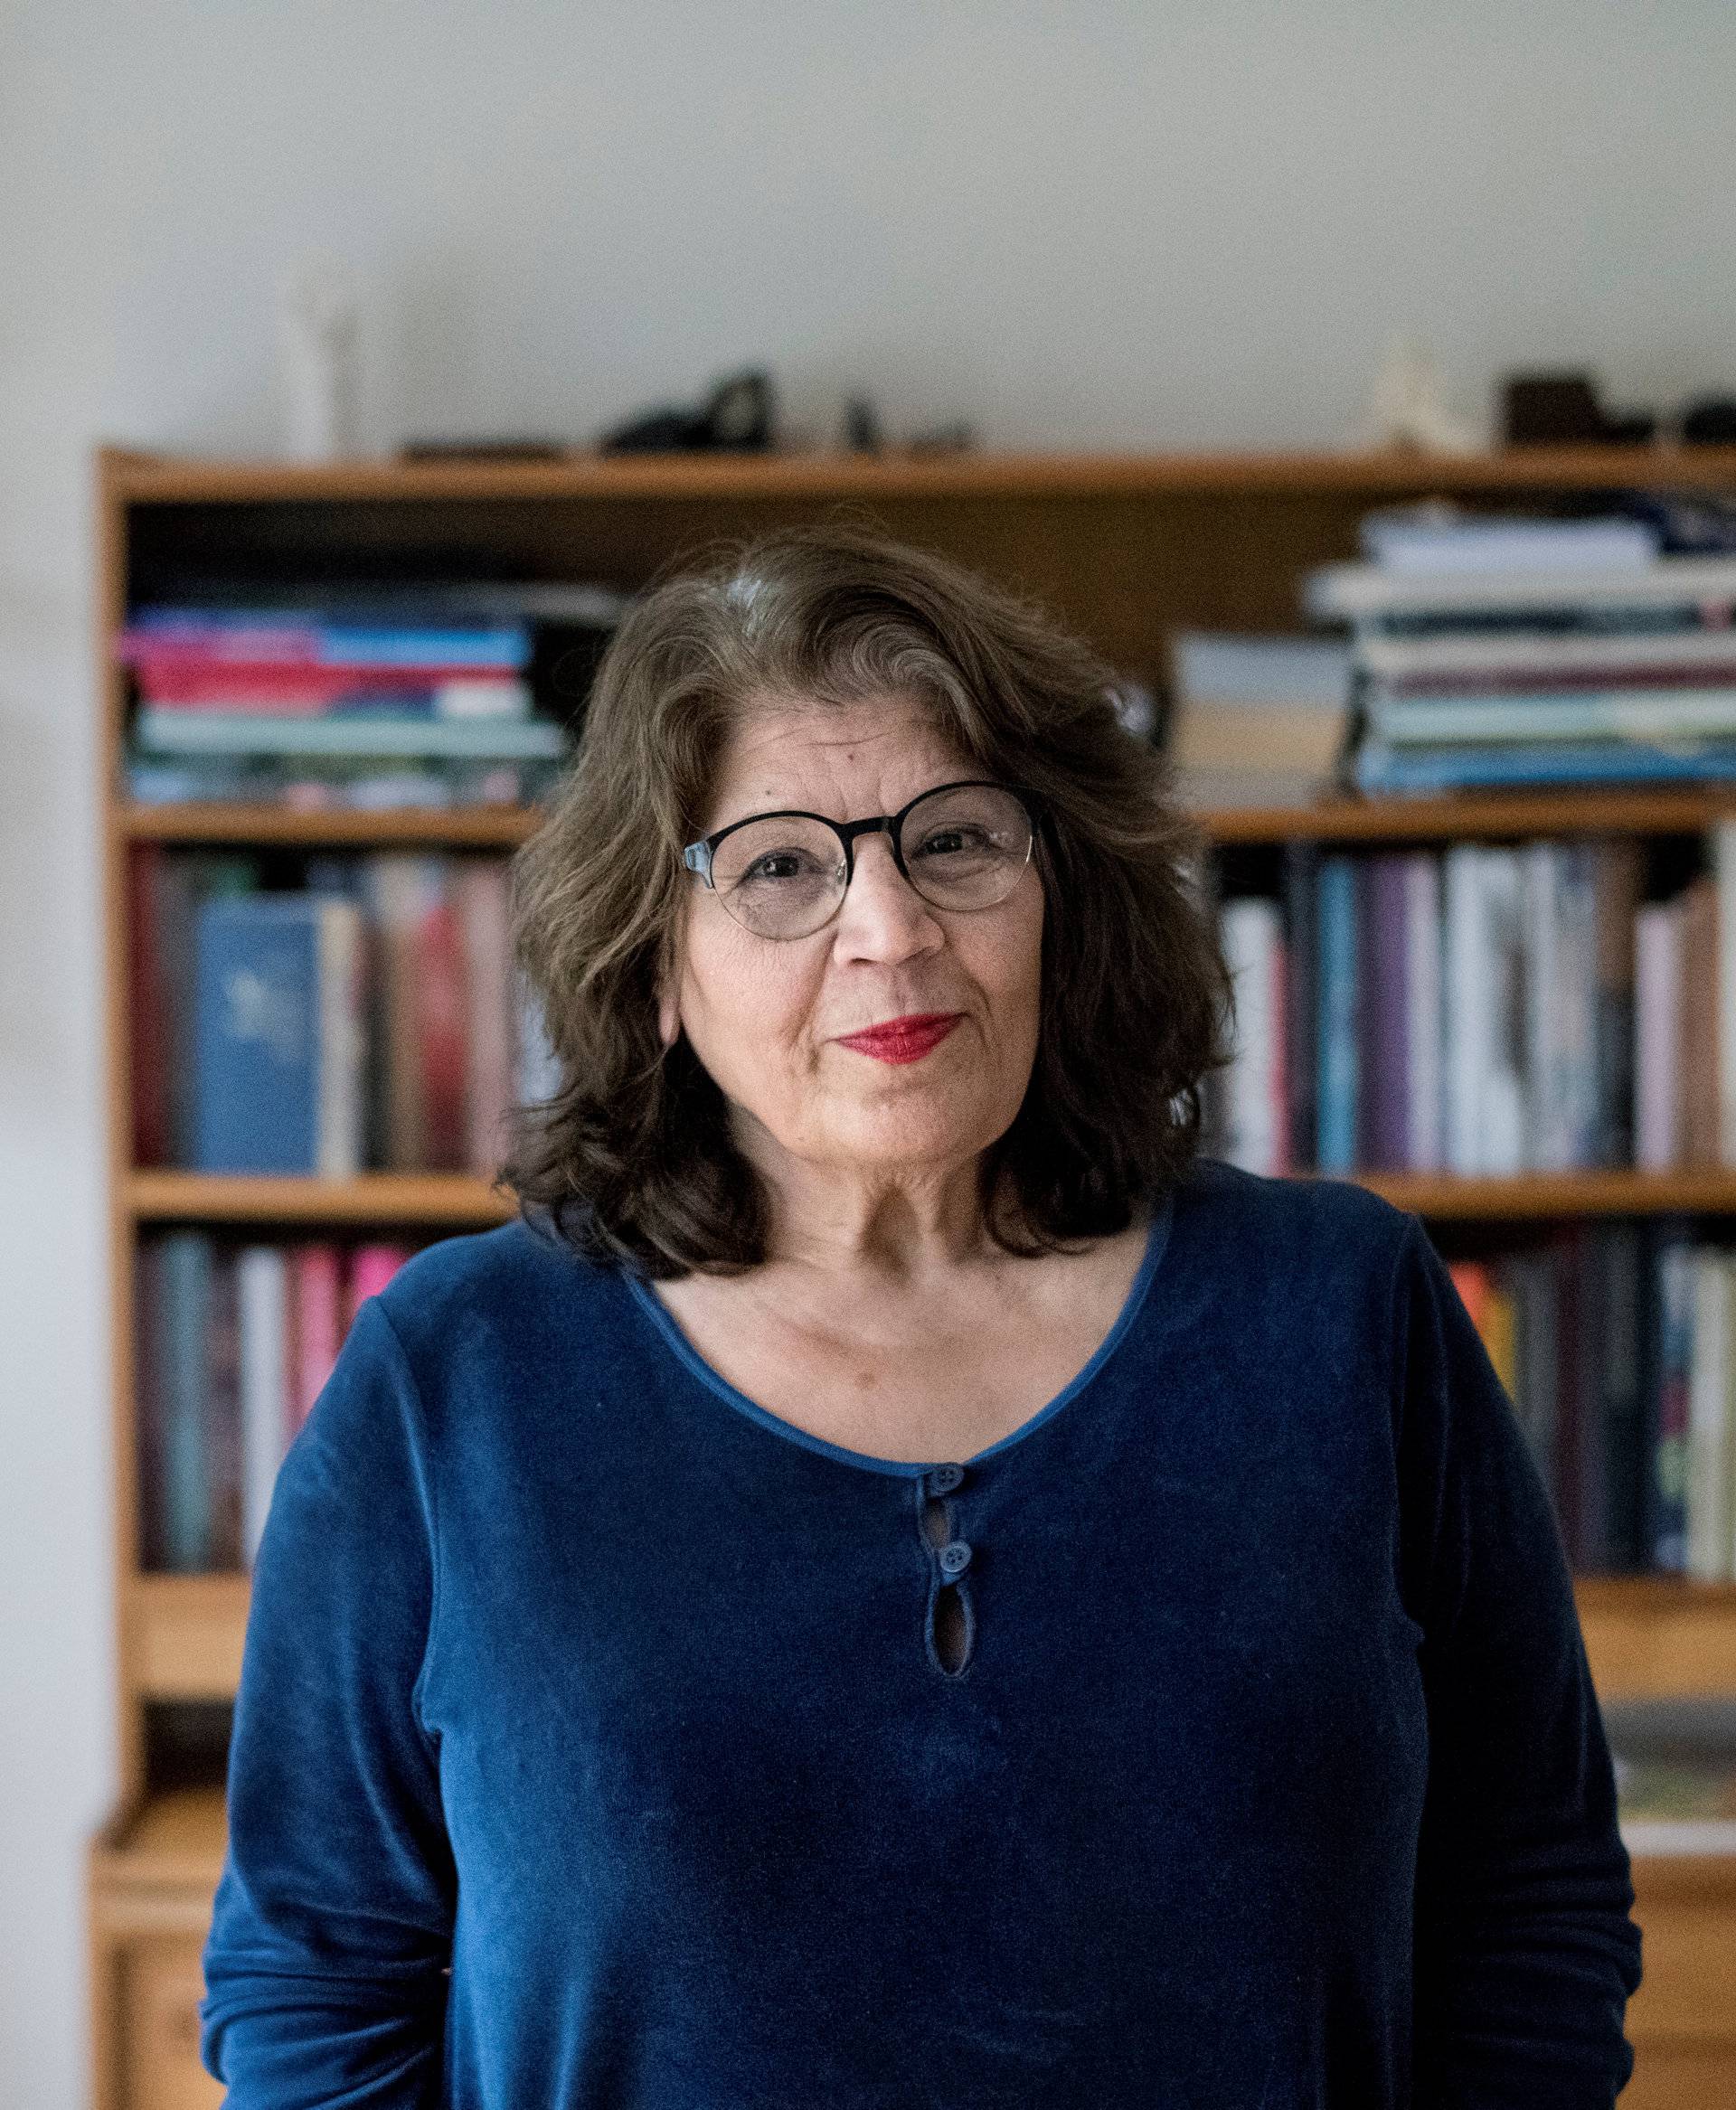 Iran-born Swedish author Jila Mossaed is photographed in Gothenburg